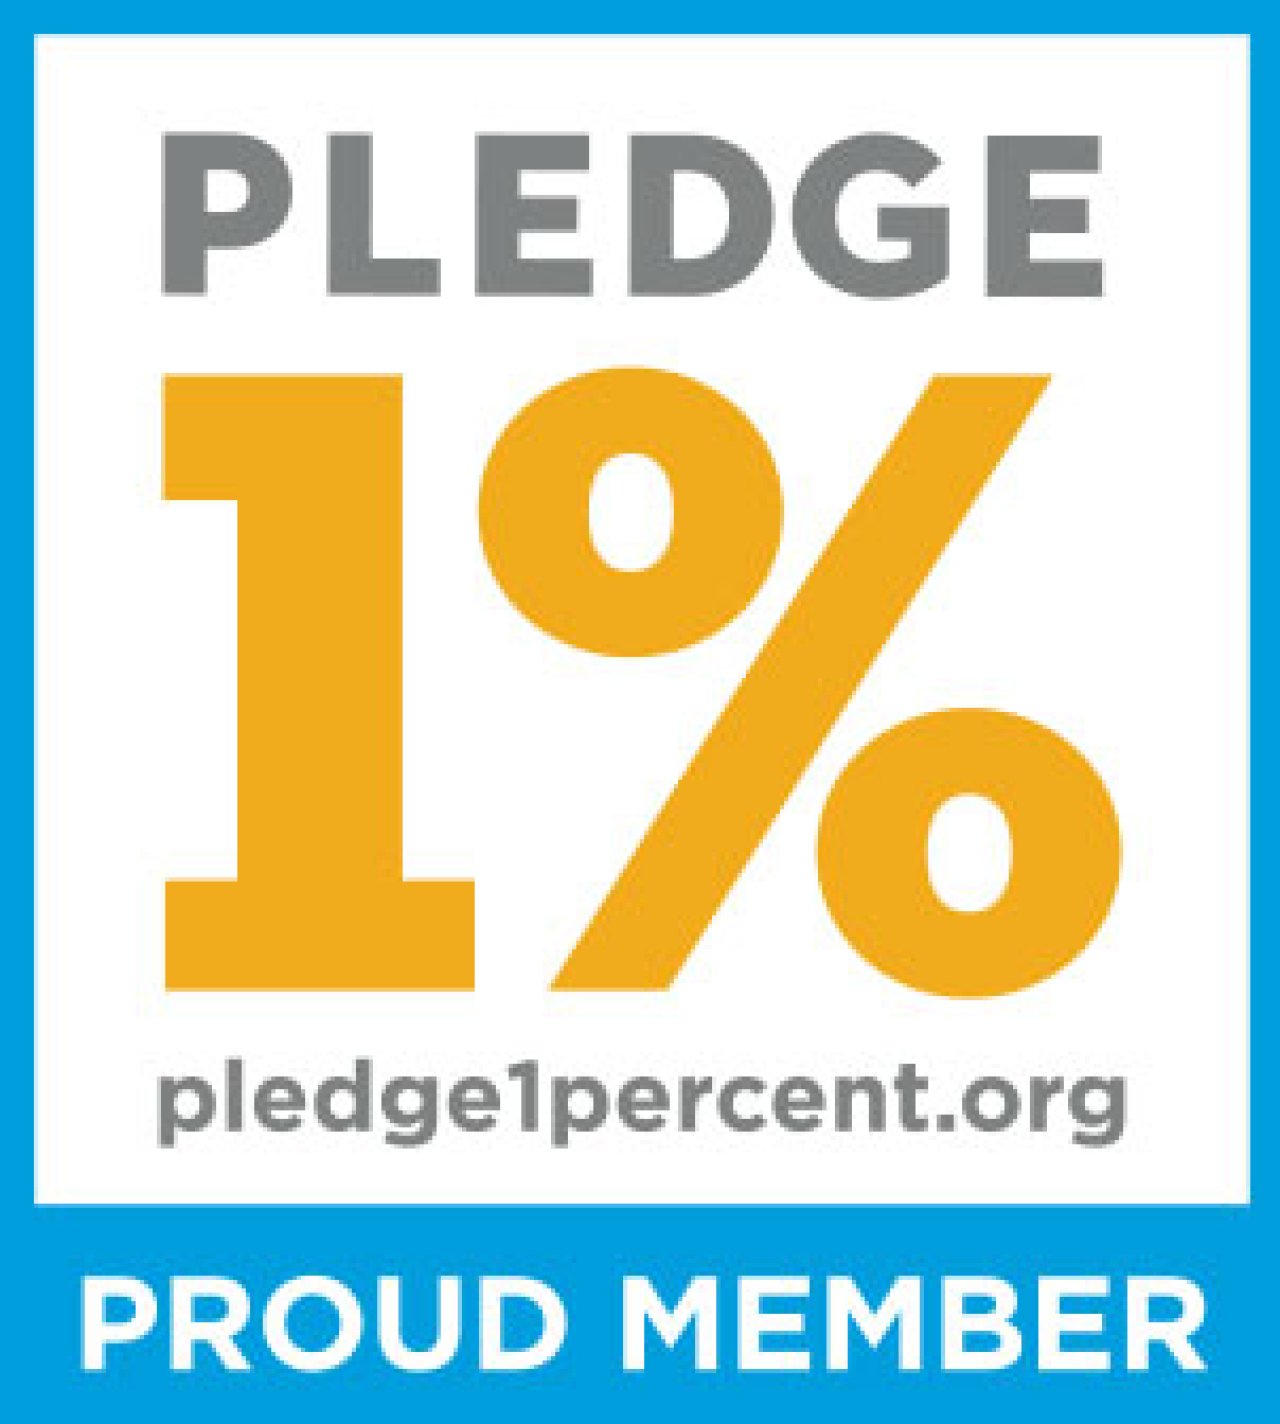 salesforce pledge 1 percent badge.